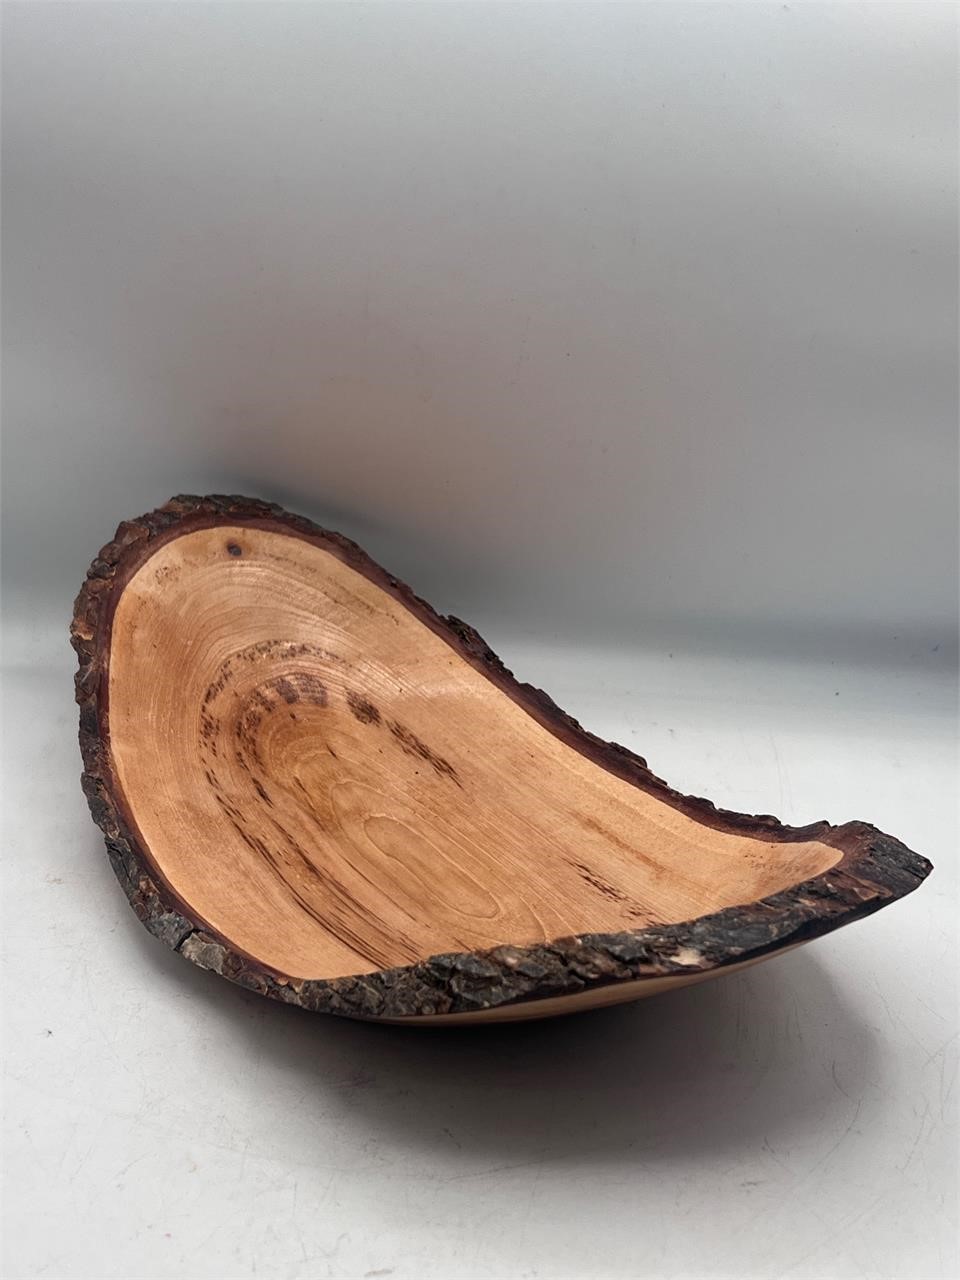 Dale overman pecan tree trinket bread bowl carved